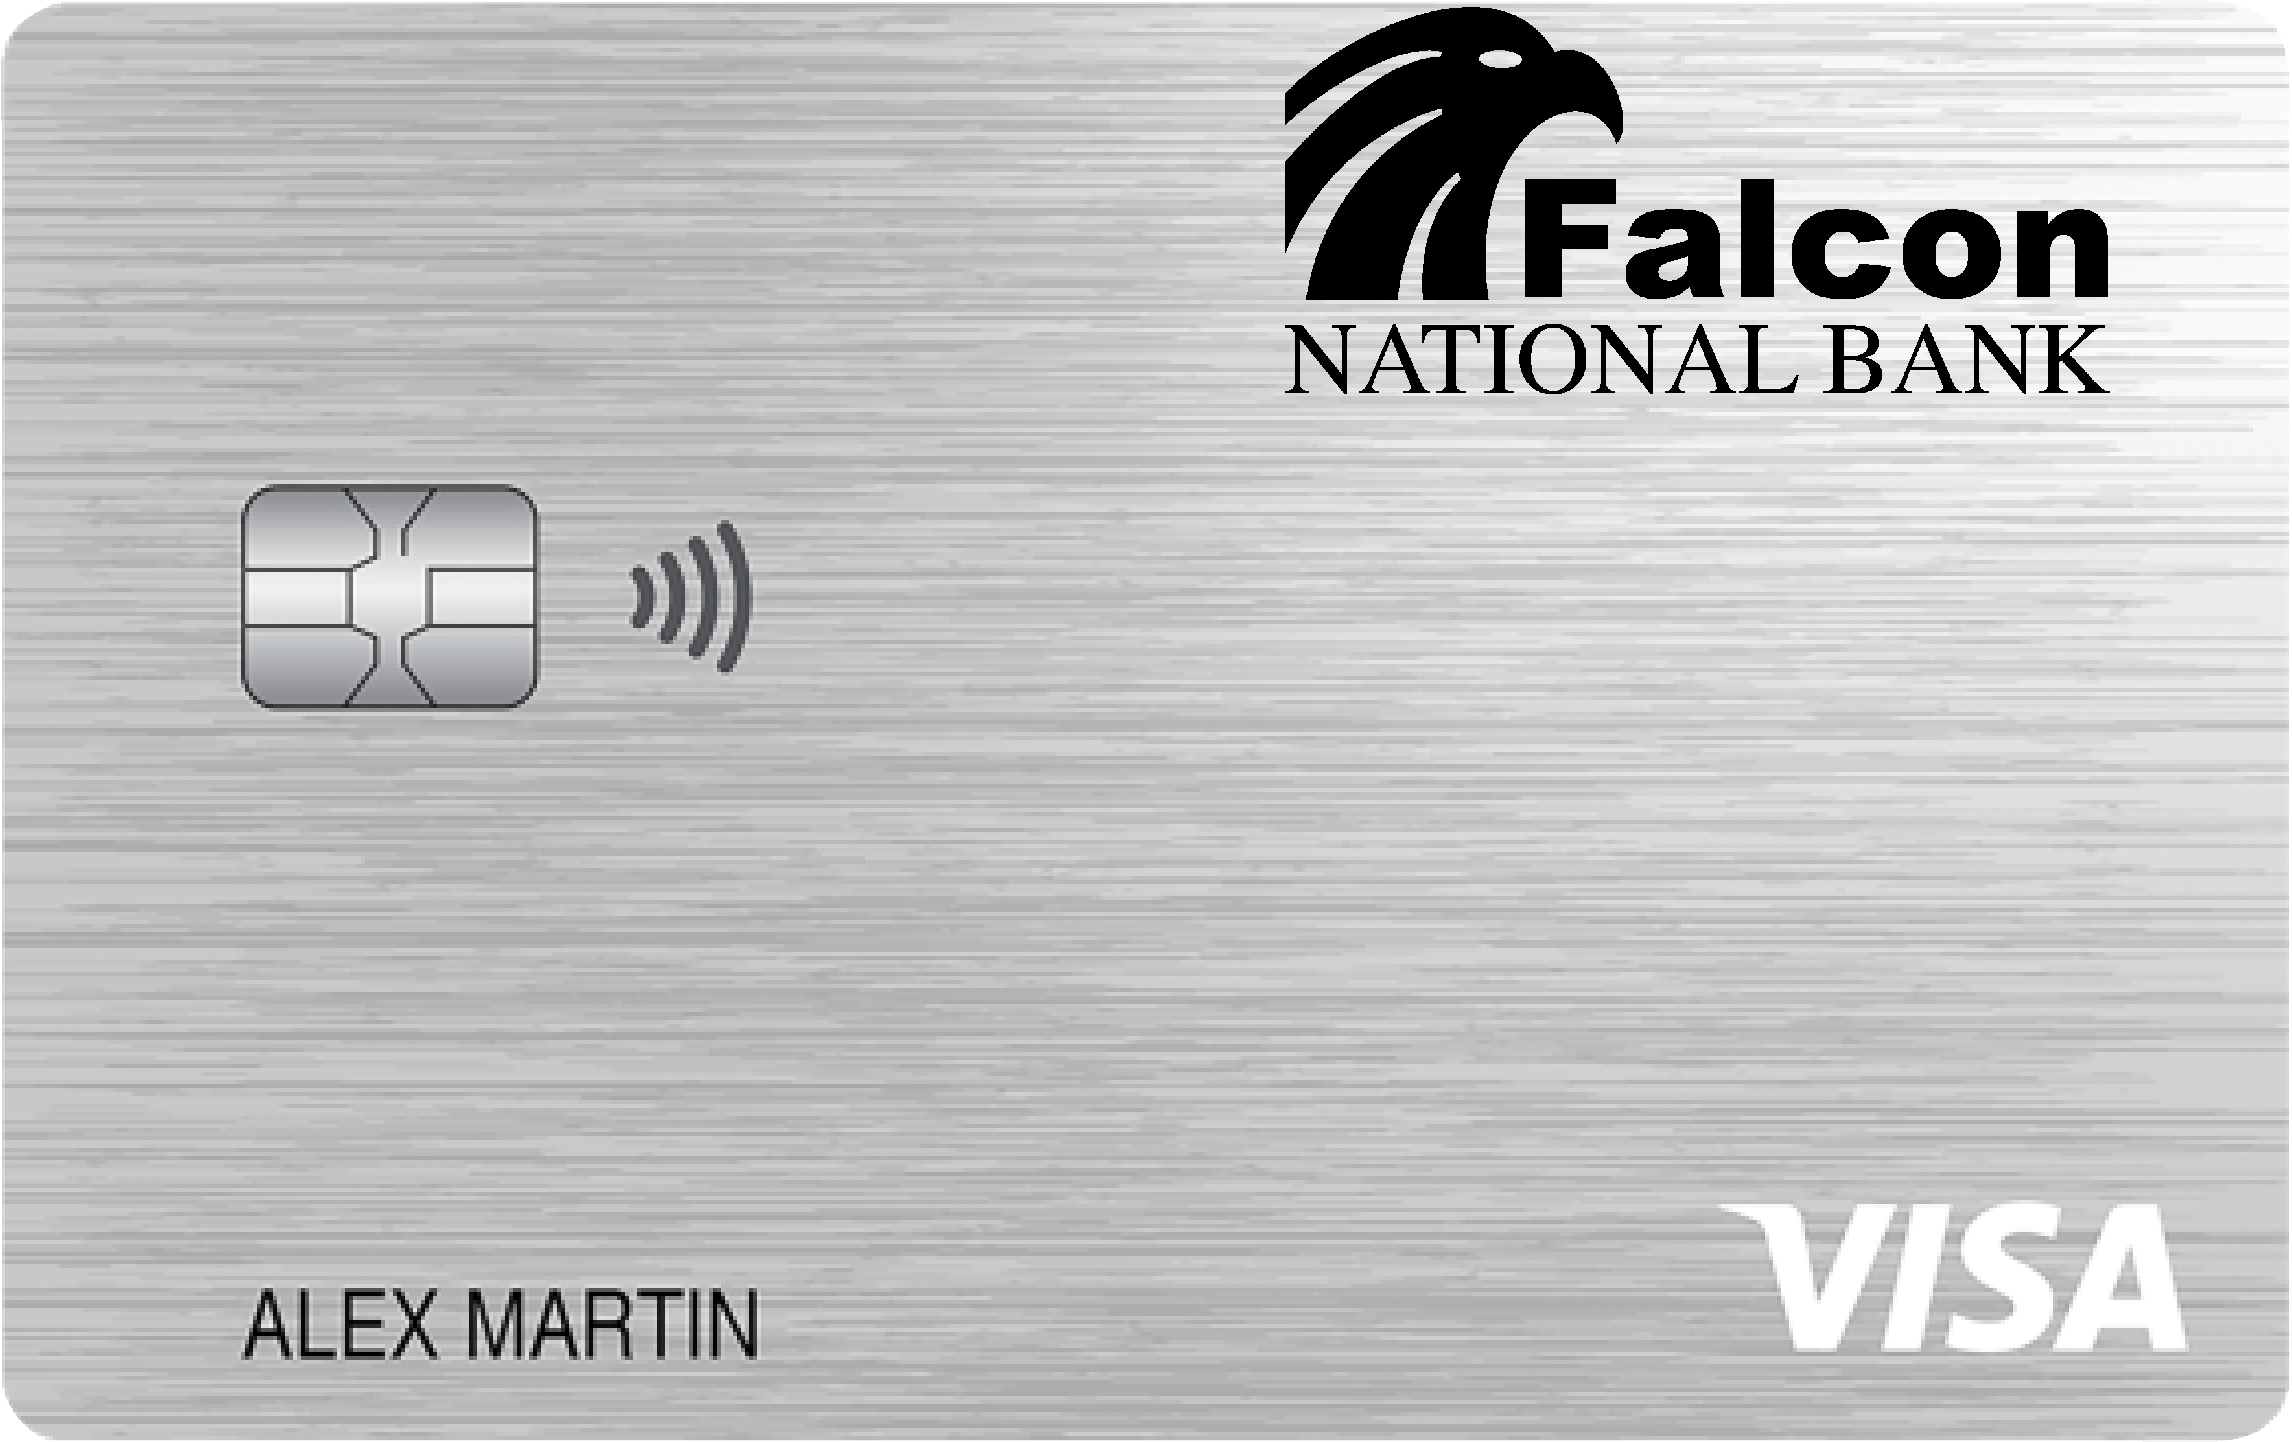 Falcon National Bank Platinum Card